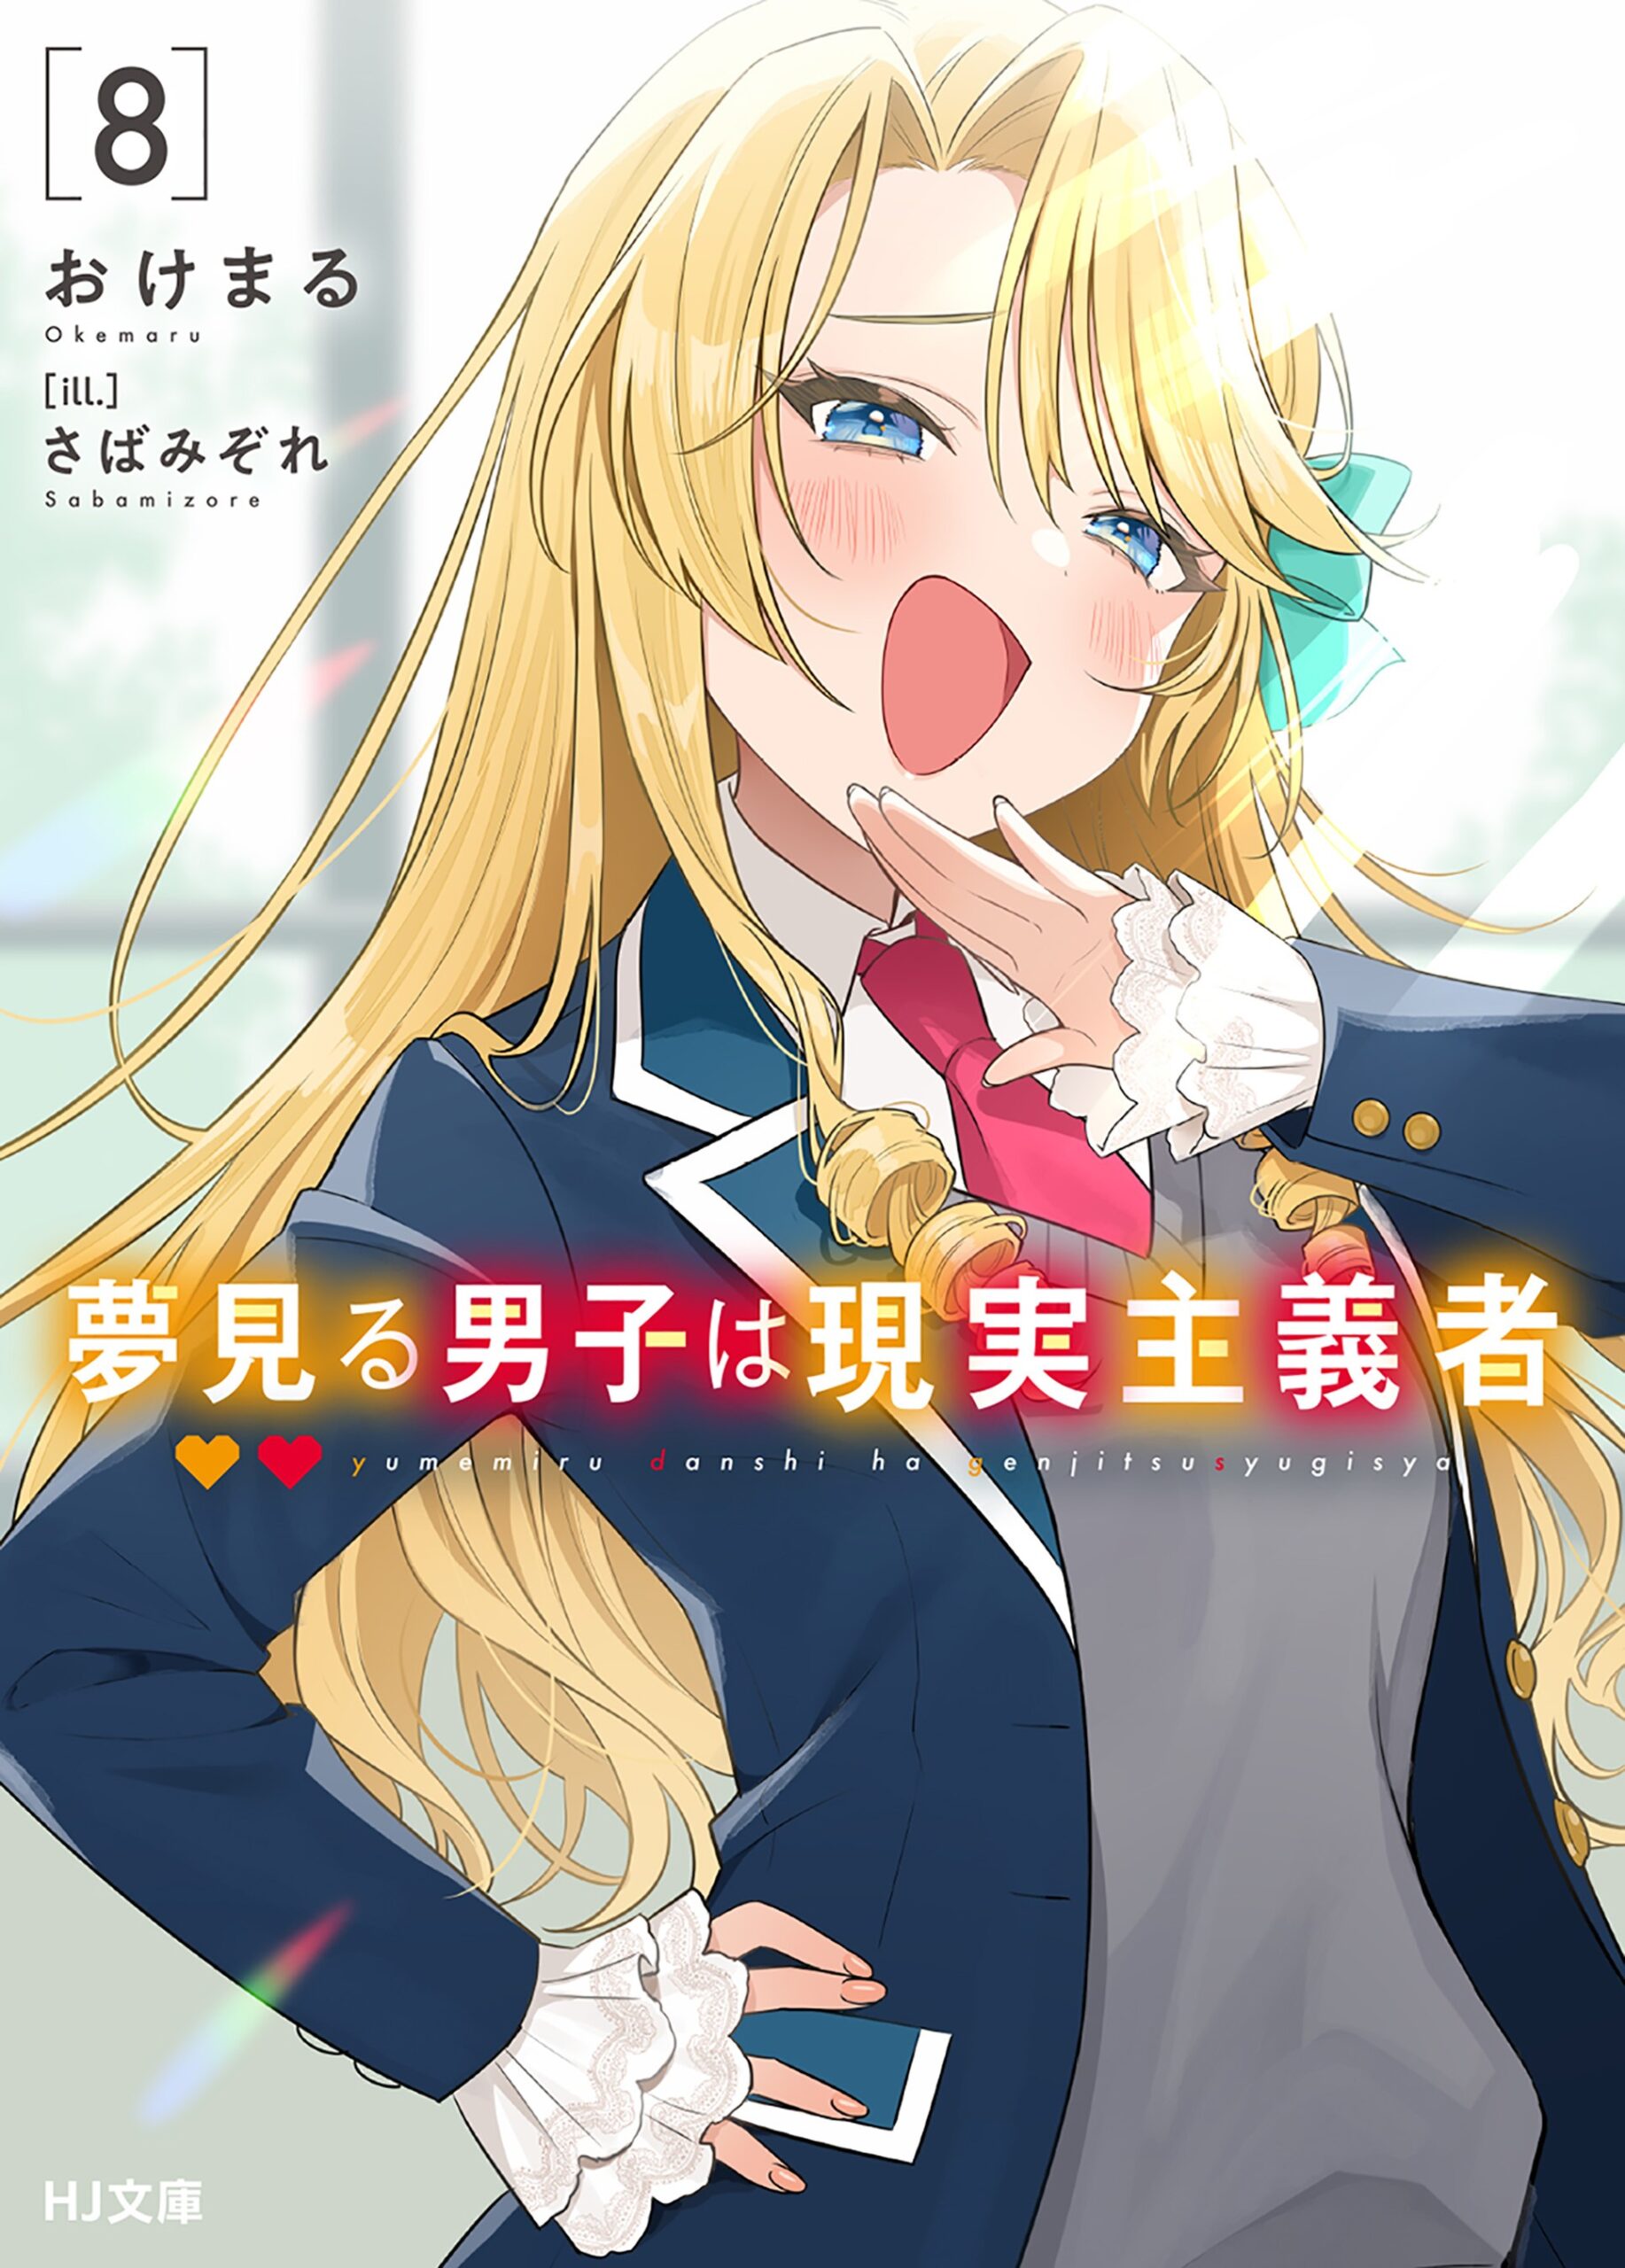 Yumemiru Danshi wa Genjitsushugisha Novel Cover 8